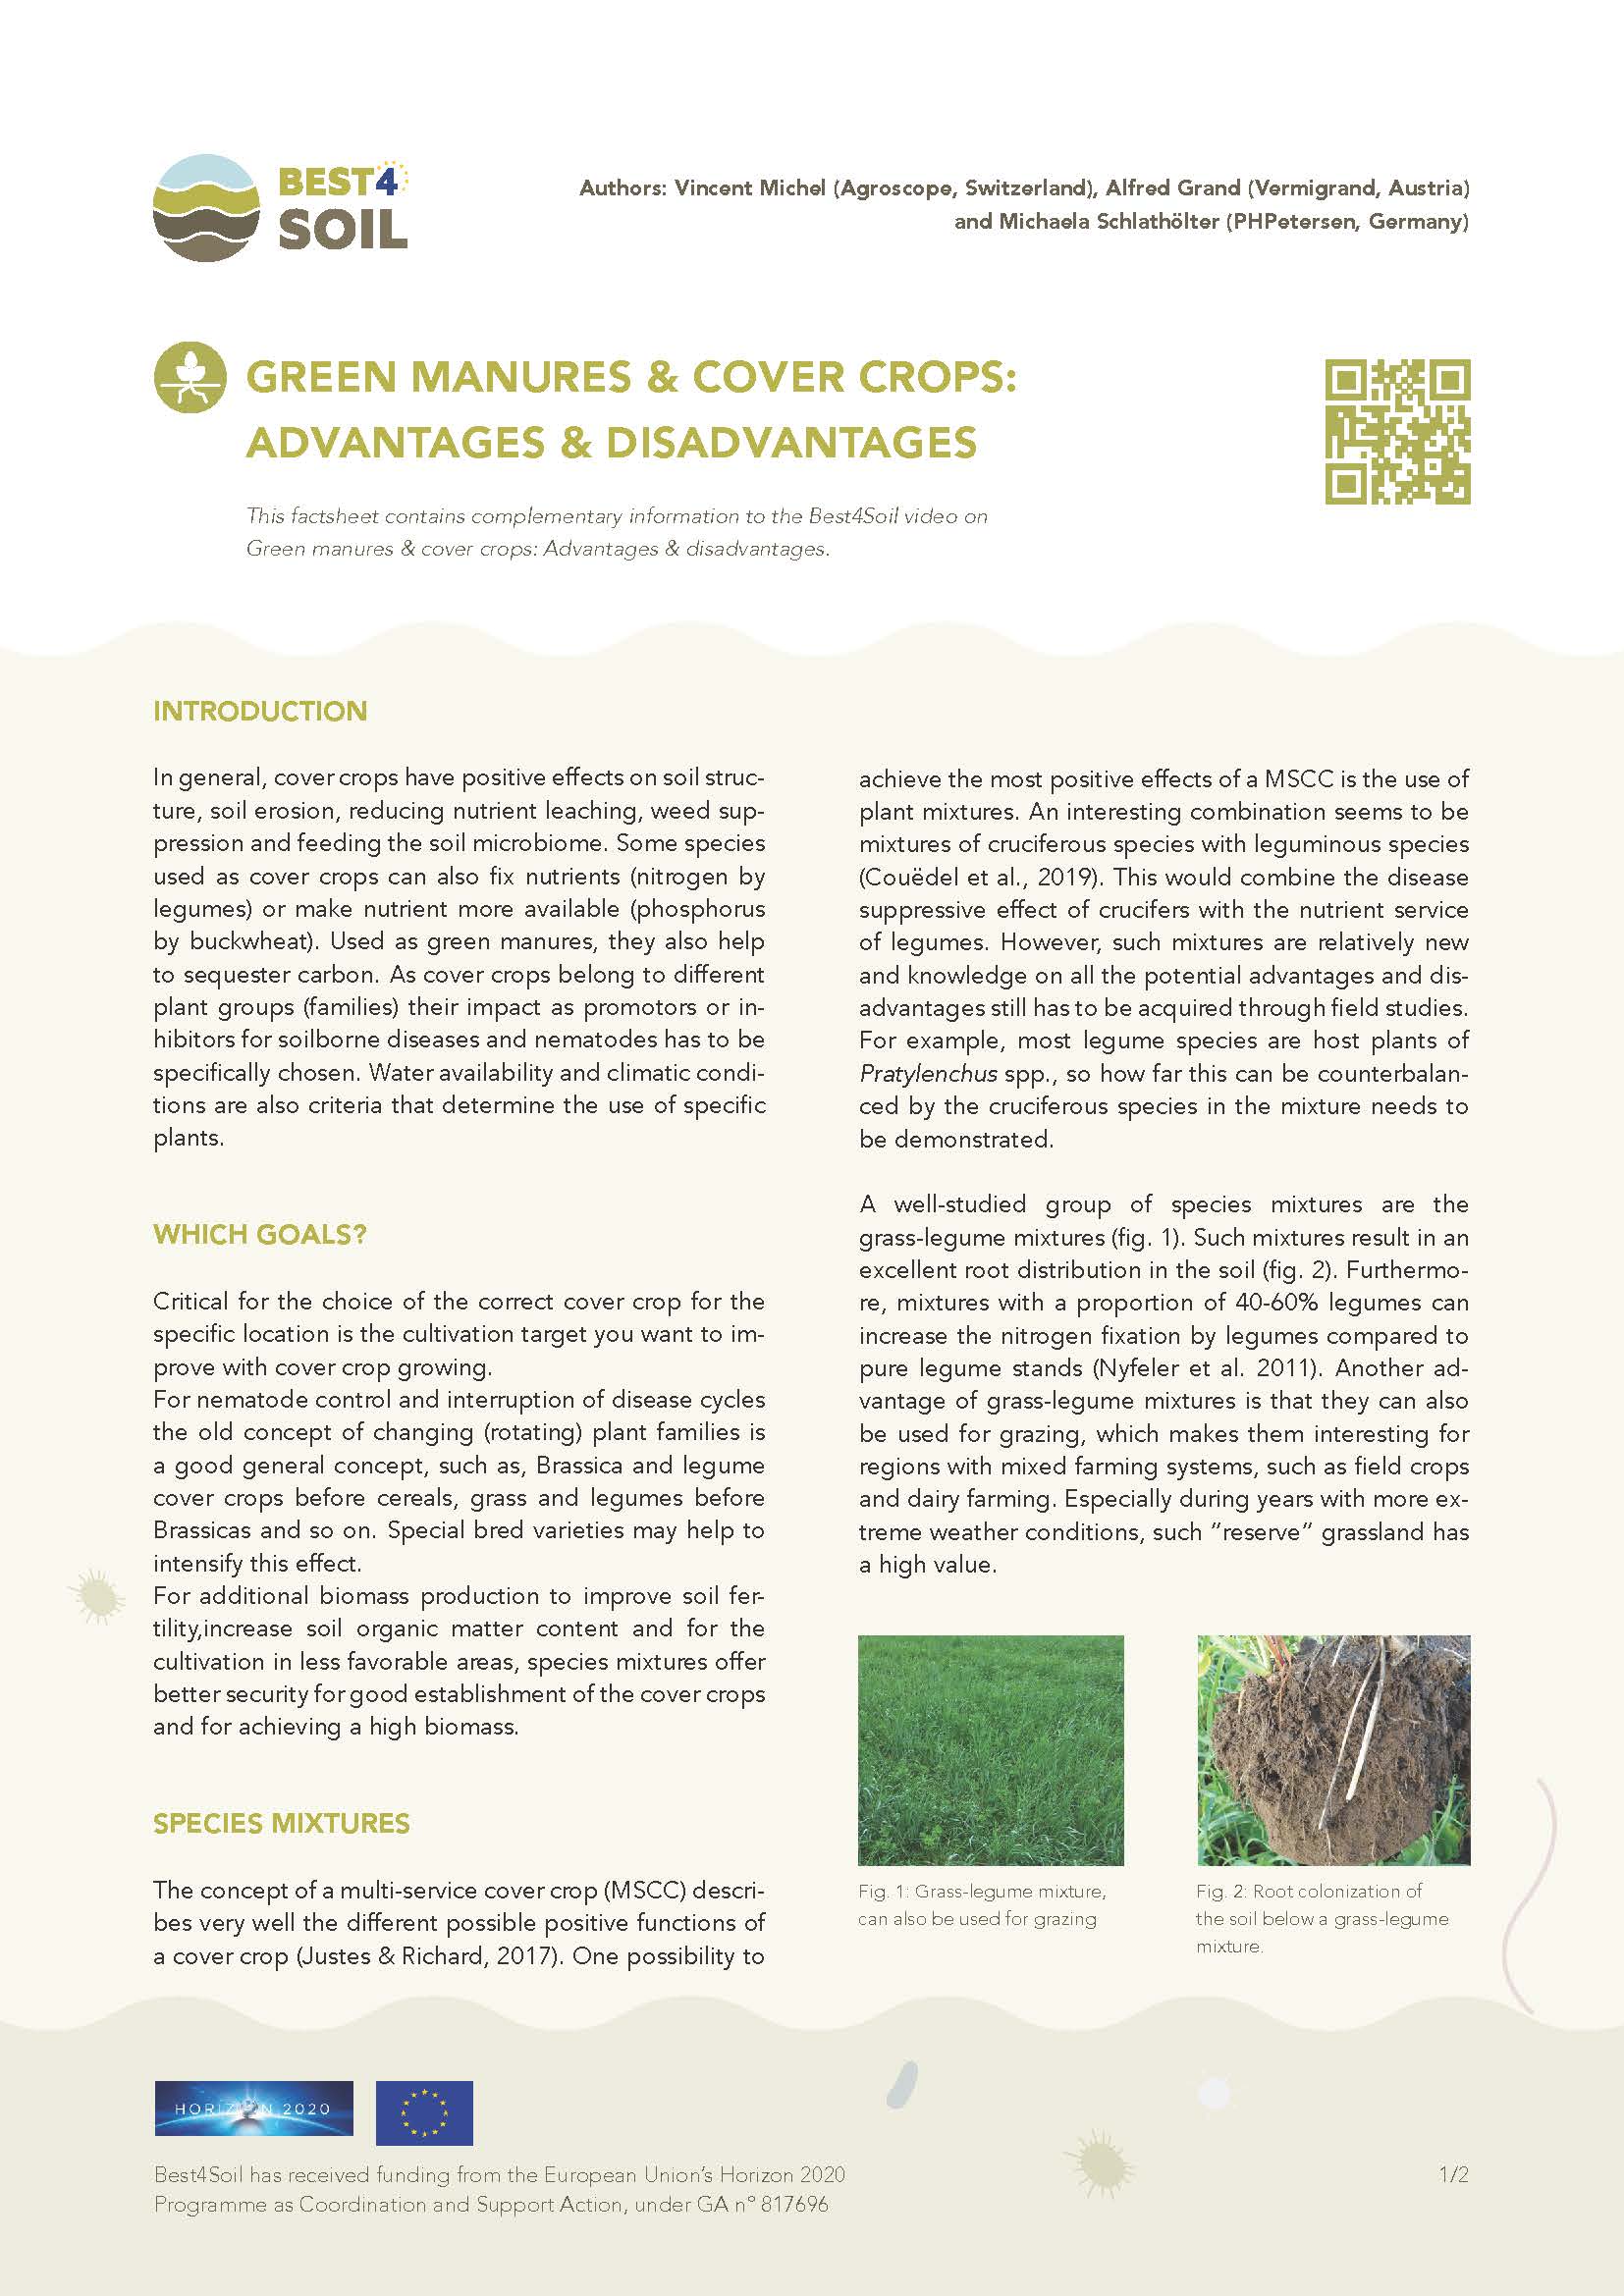 Green manures & cover crops: Advantages & disadvantages (Best4Soil Factsheet)